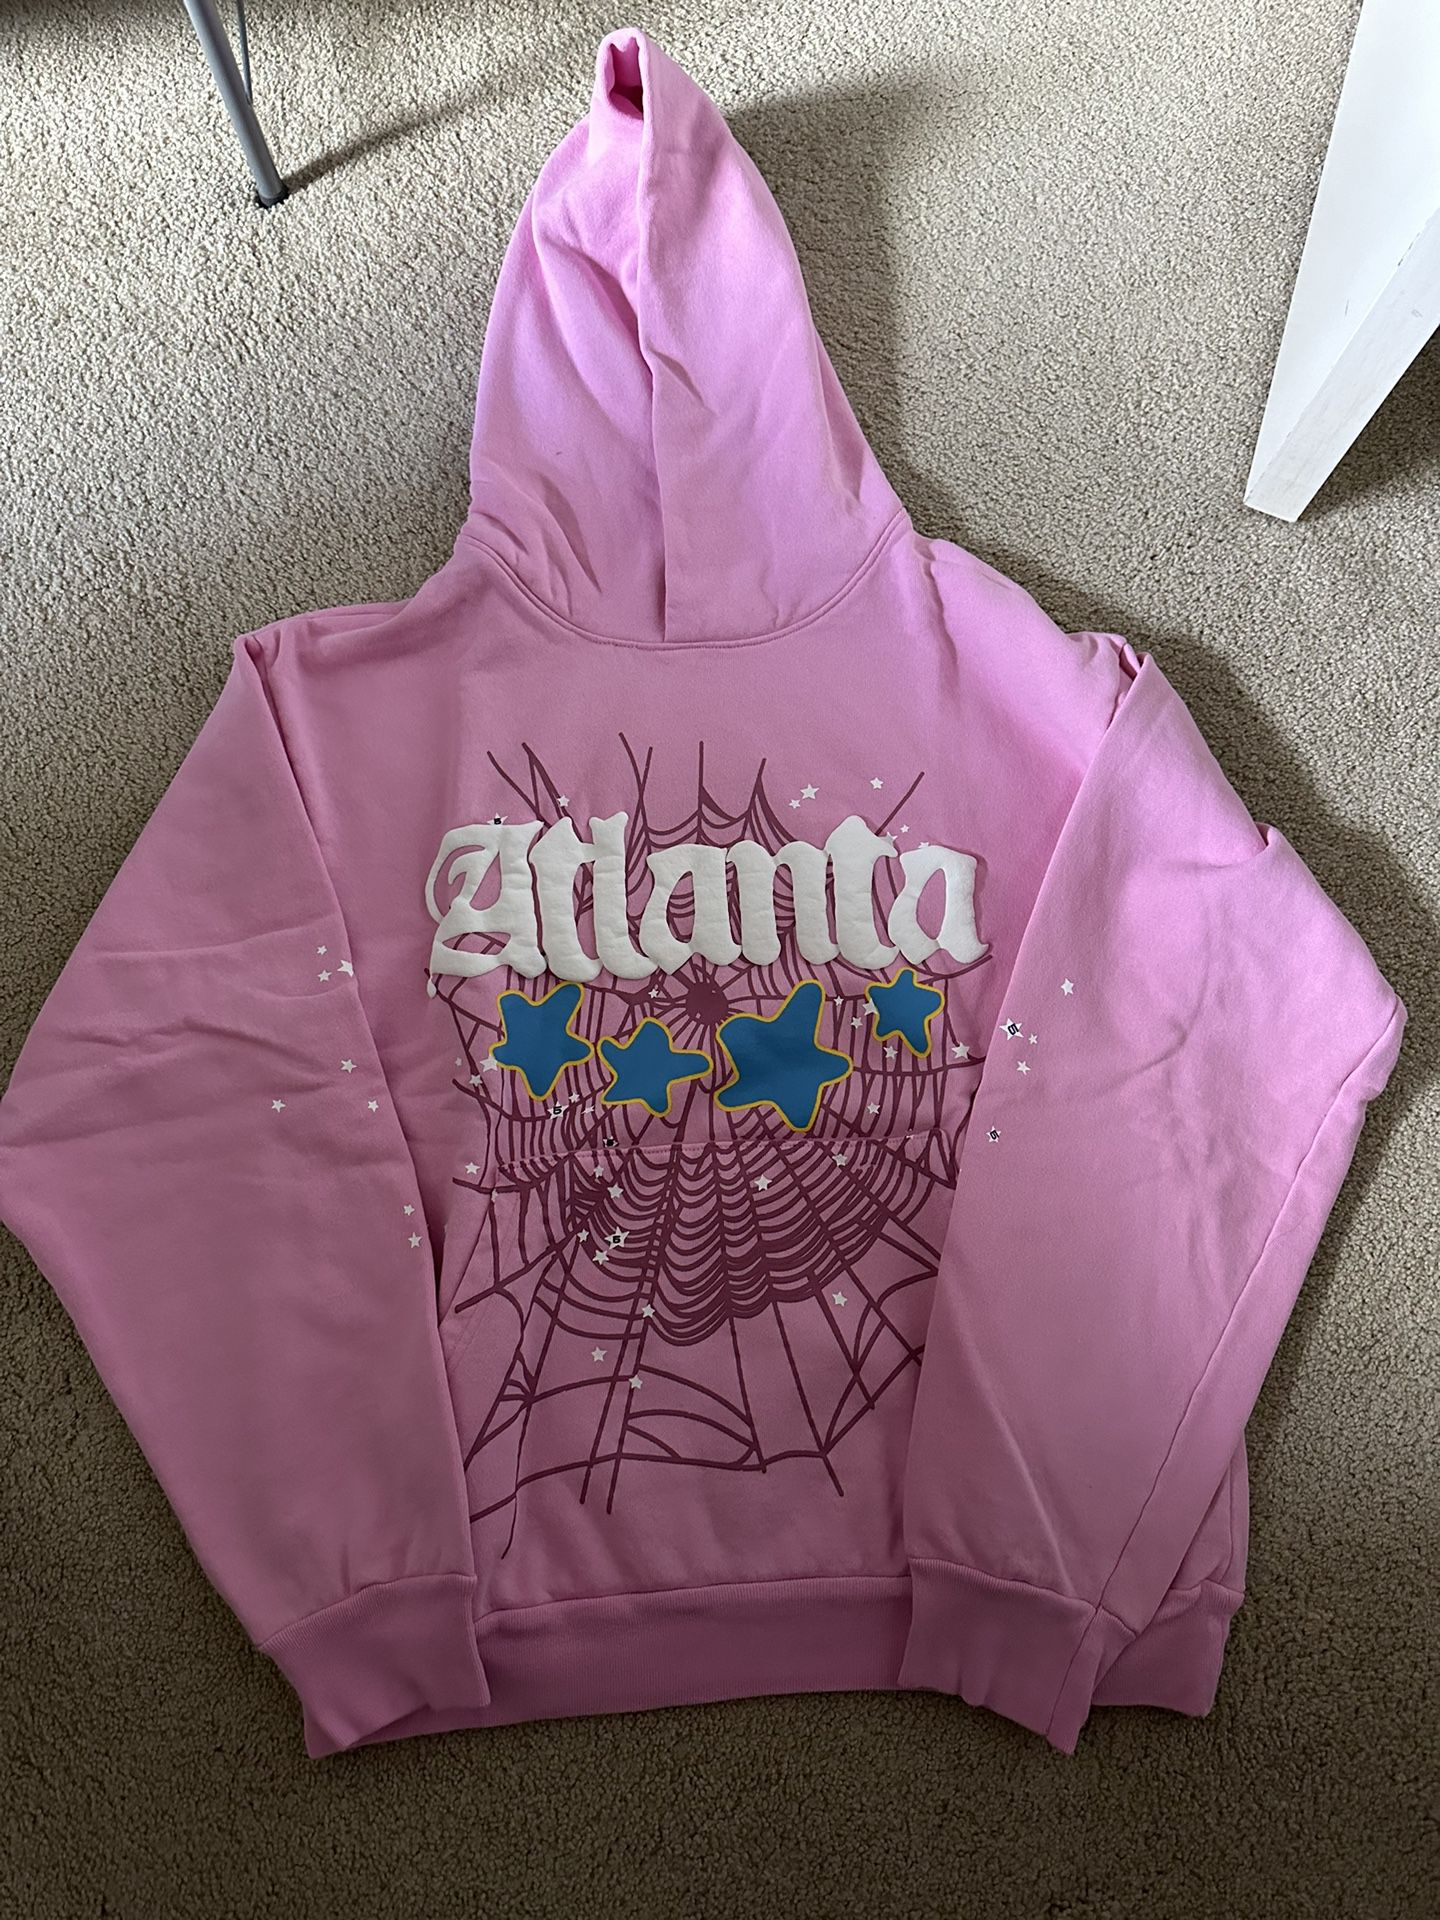 Sp5der Atlanta Pink Hoodie Size Medium 